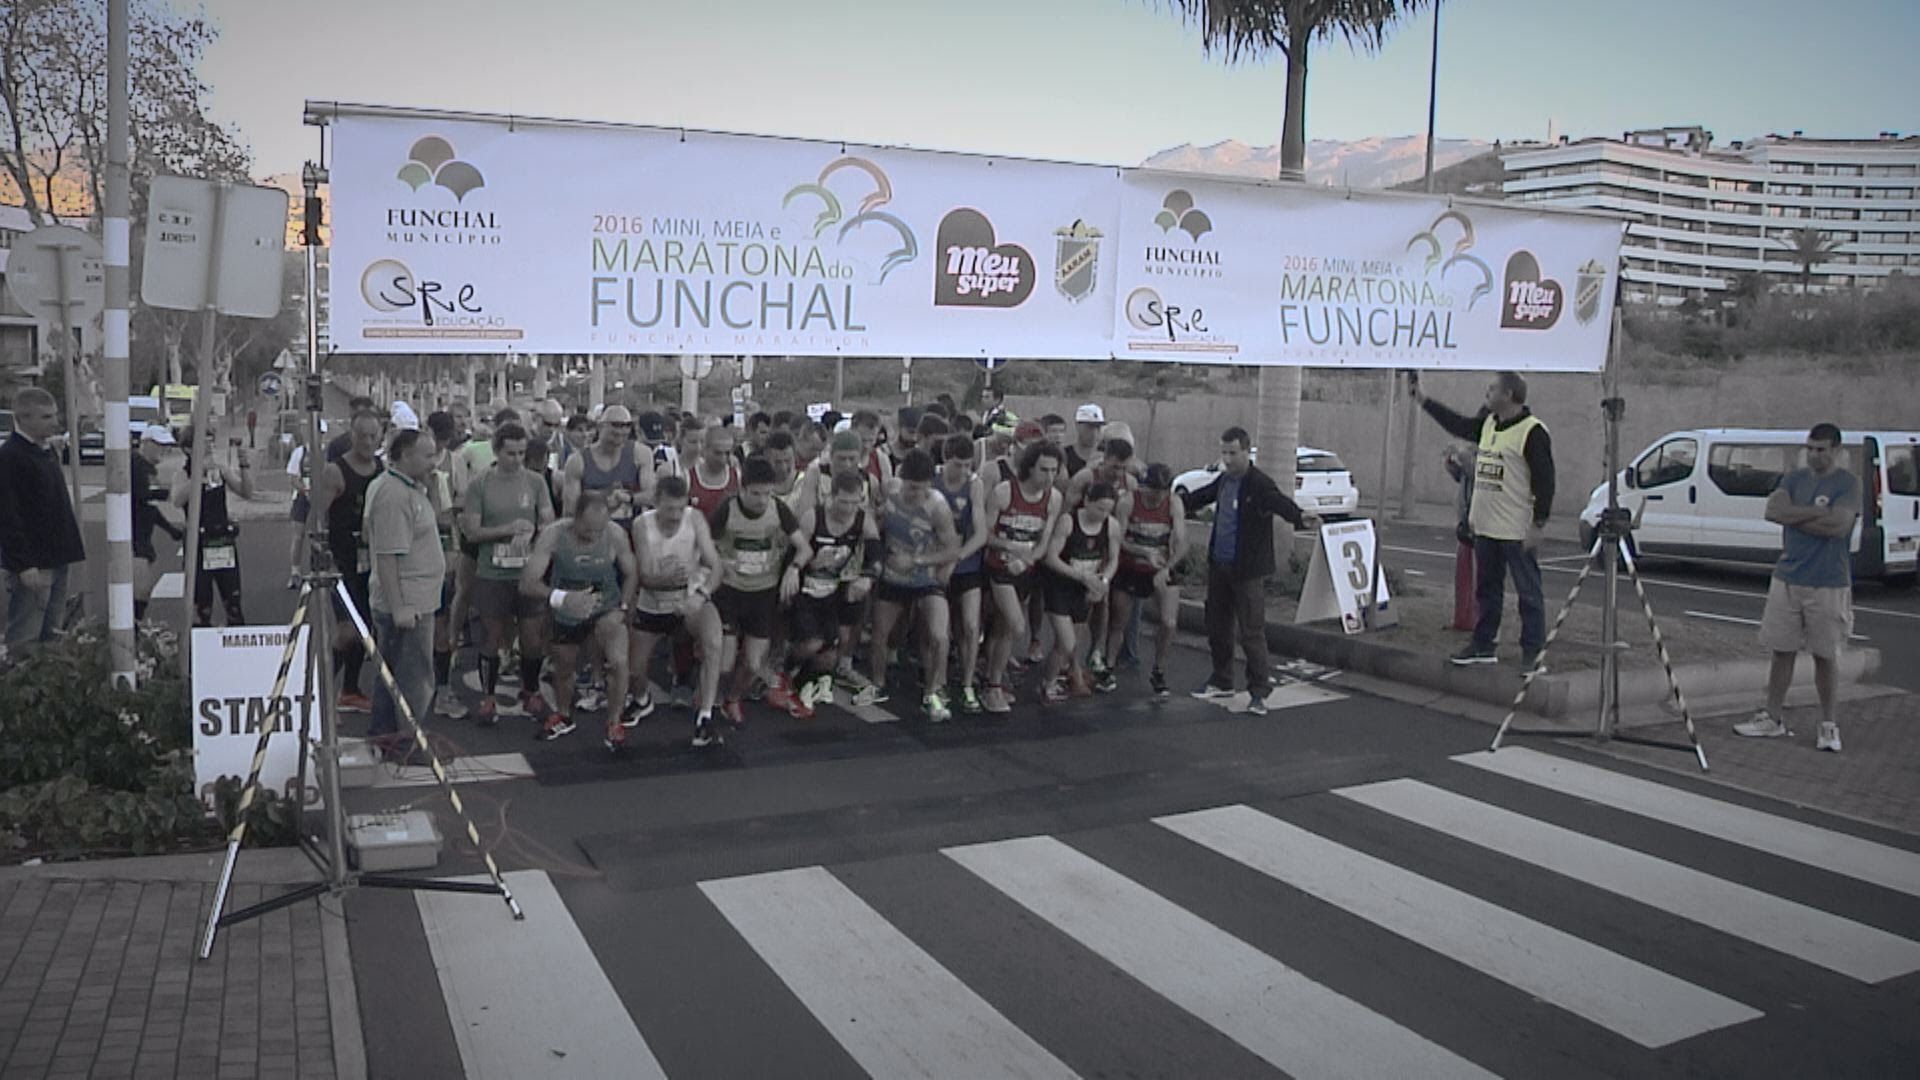 Atletismo: Maratona e Meia Maratona do Funchal 2016